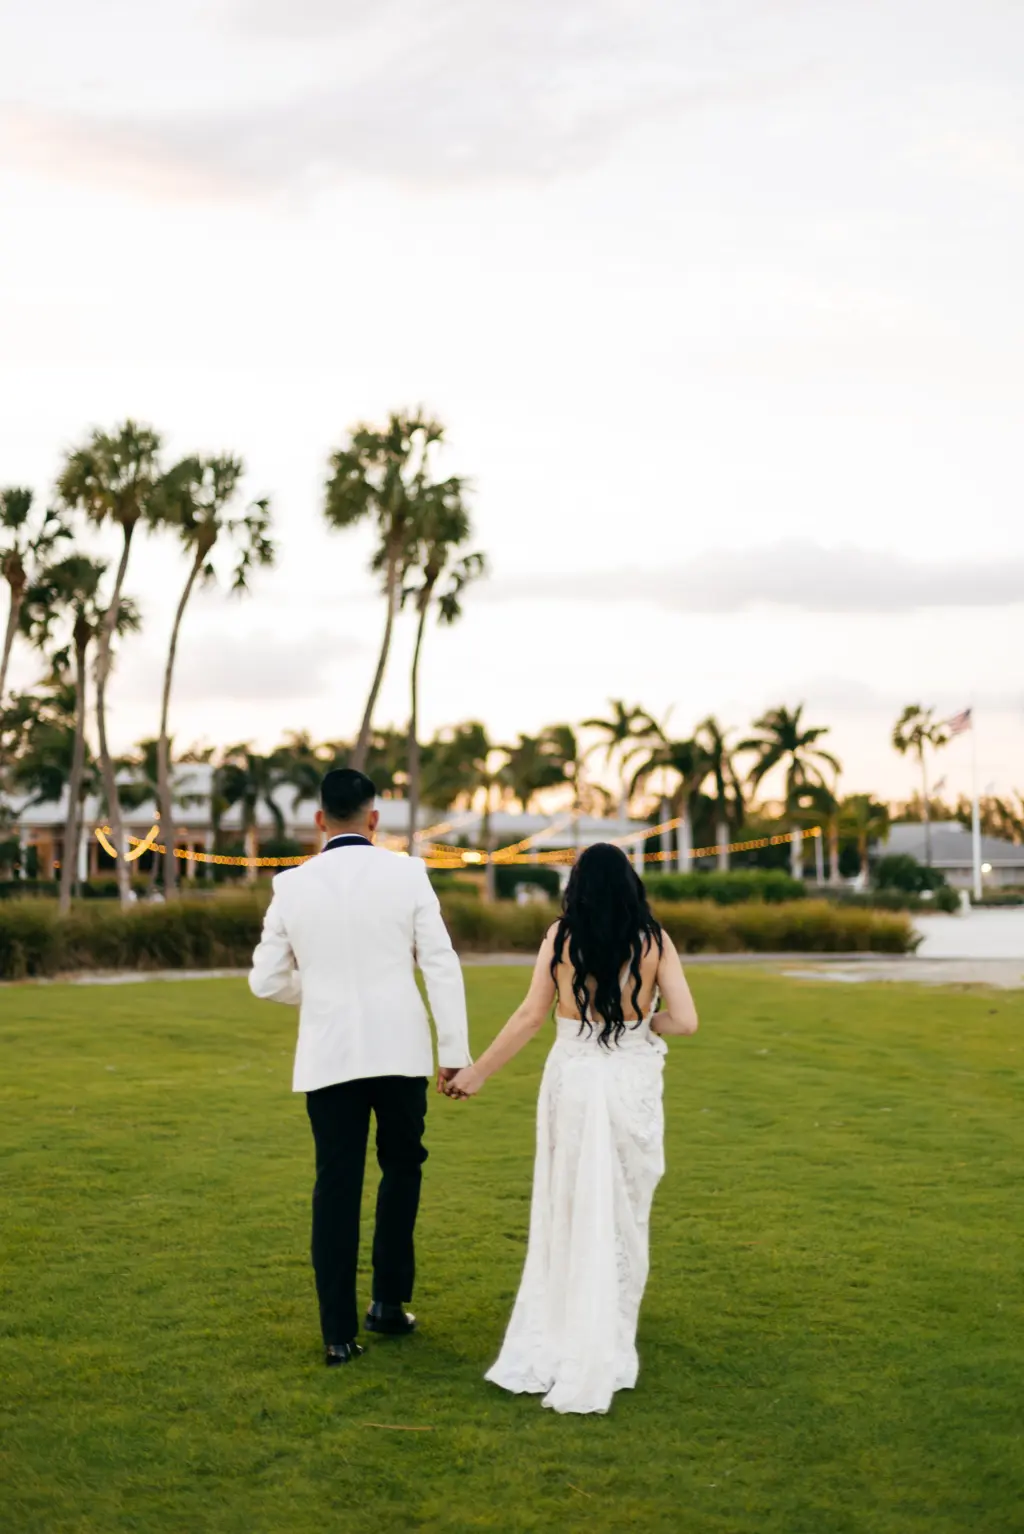 Black Tie Fall Wedding at Sarasota Event Venue The Resort at Longboat Key Club | Bride and Groom Golf Course Portrait